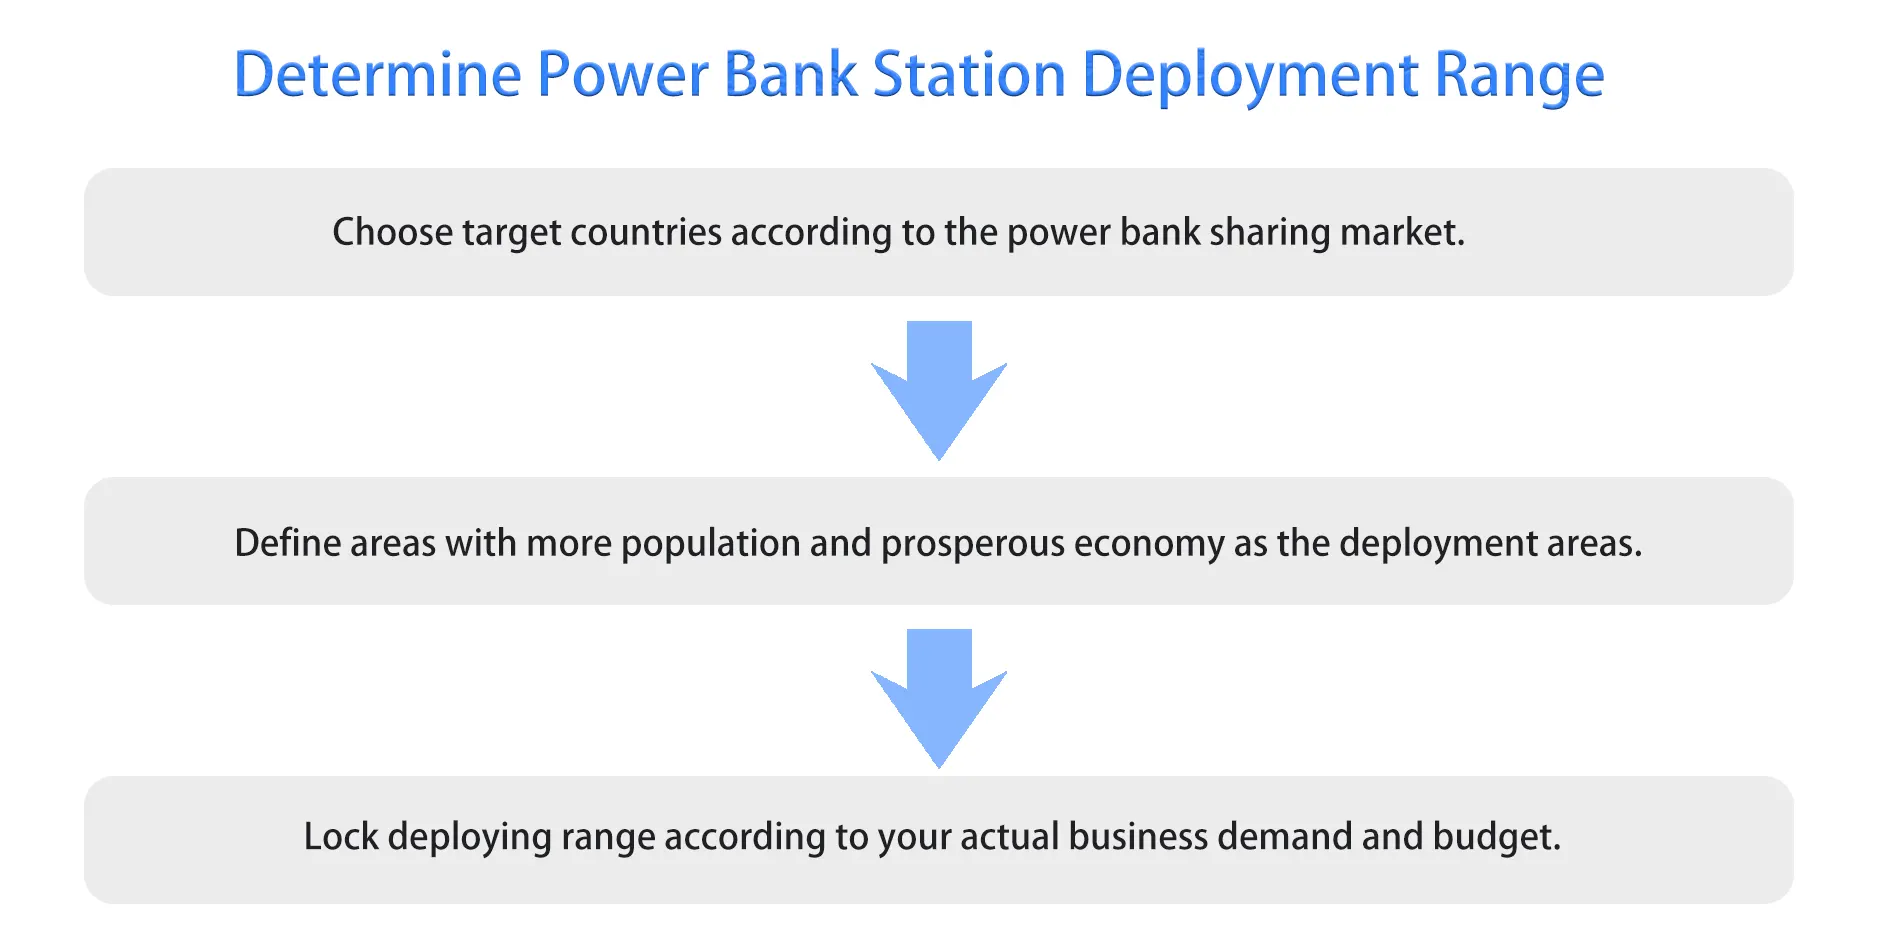 how to determine power bank station deployment range